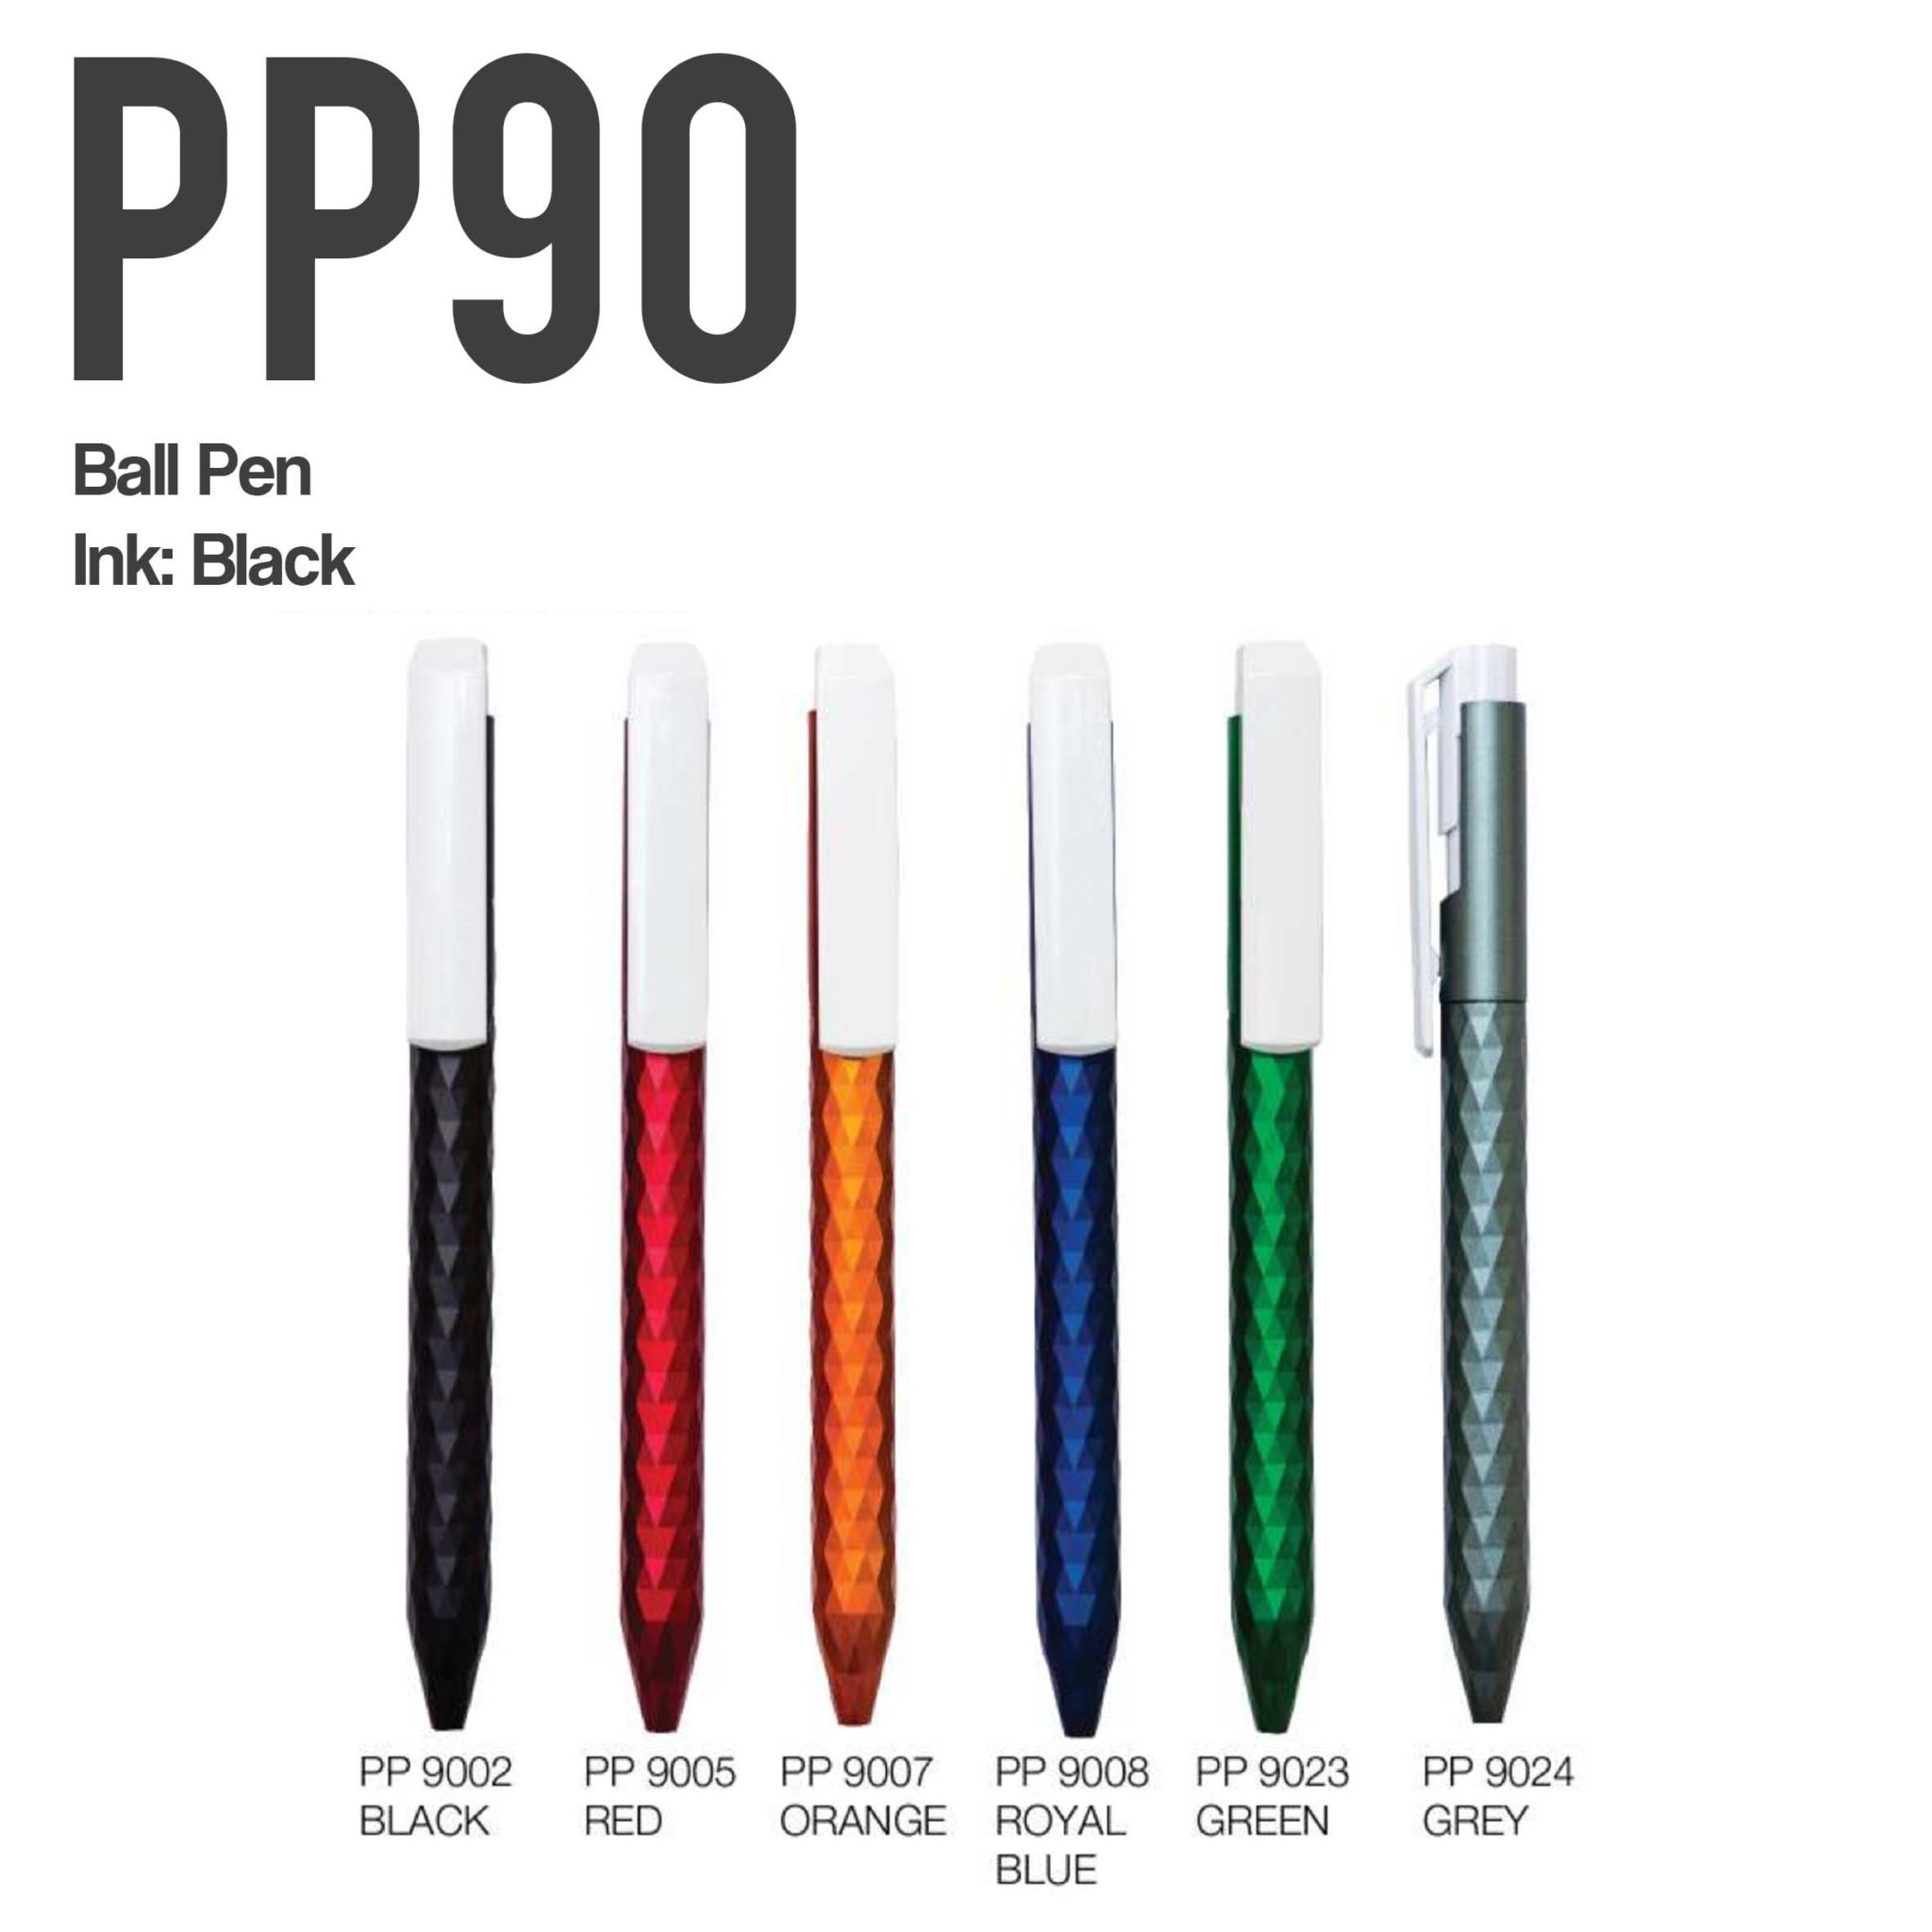 PP89 plastic pen scaled